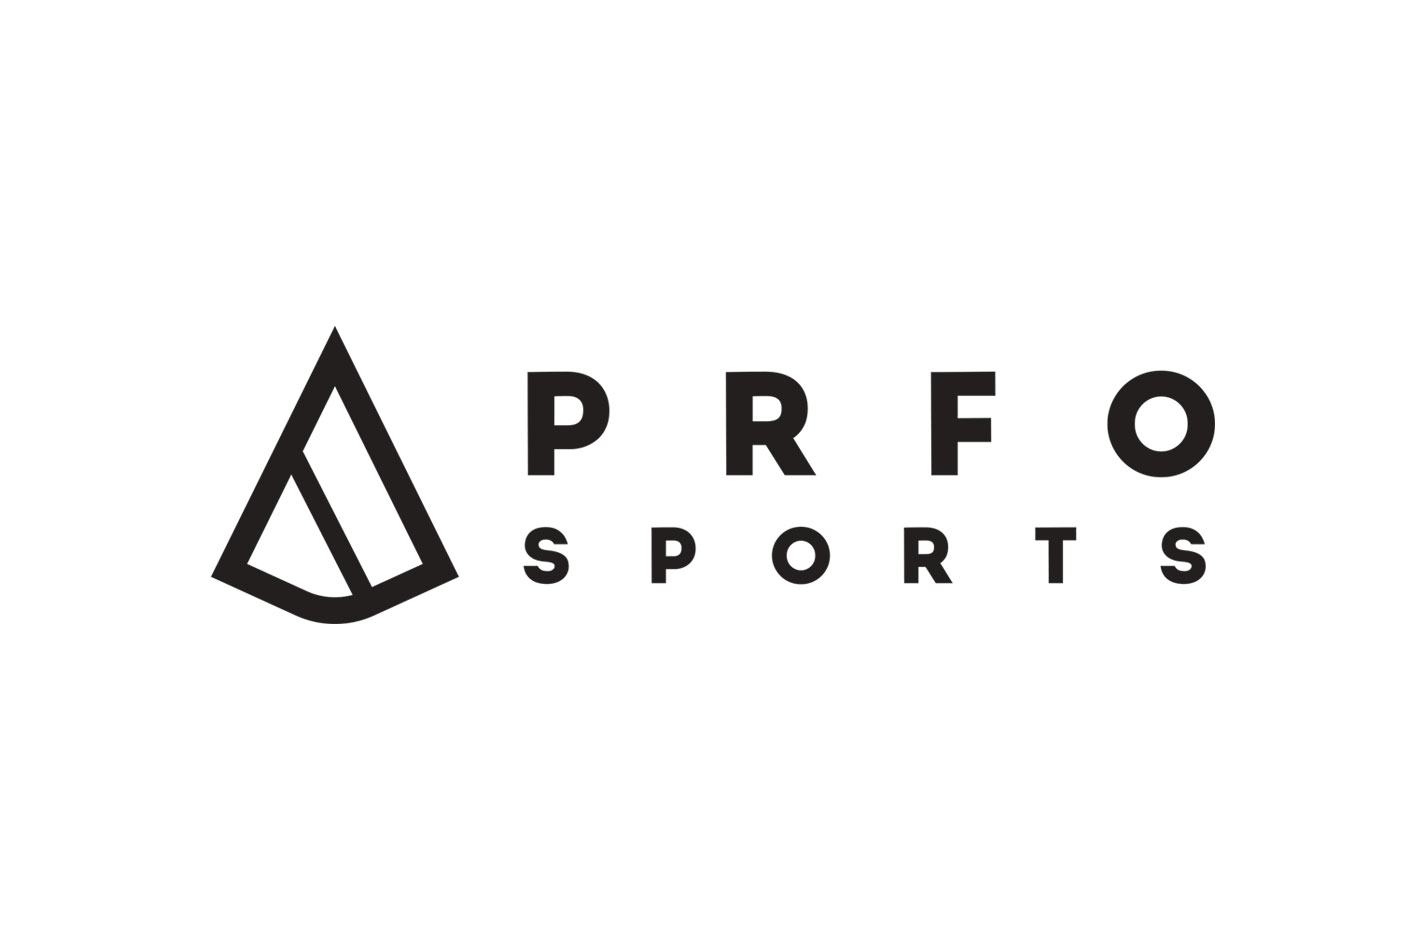 PRFO Sports - Crunchbase Company Profile & Funding